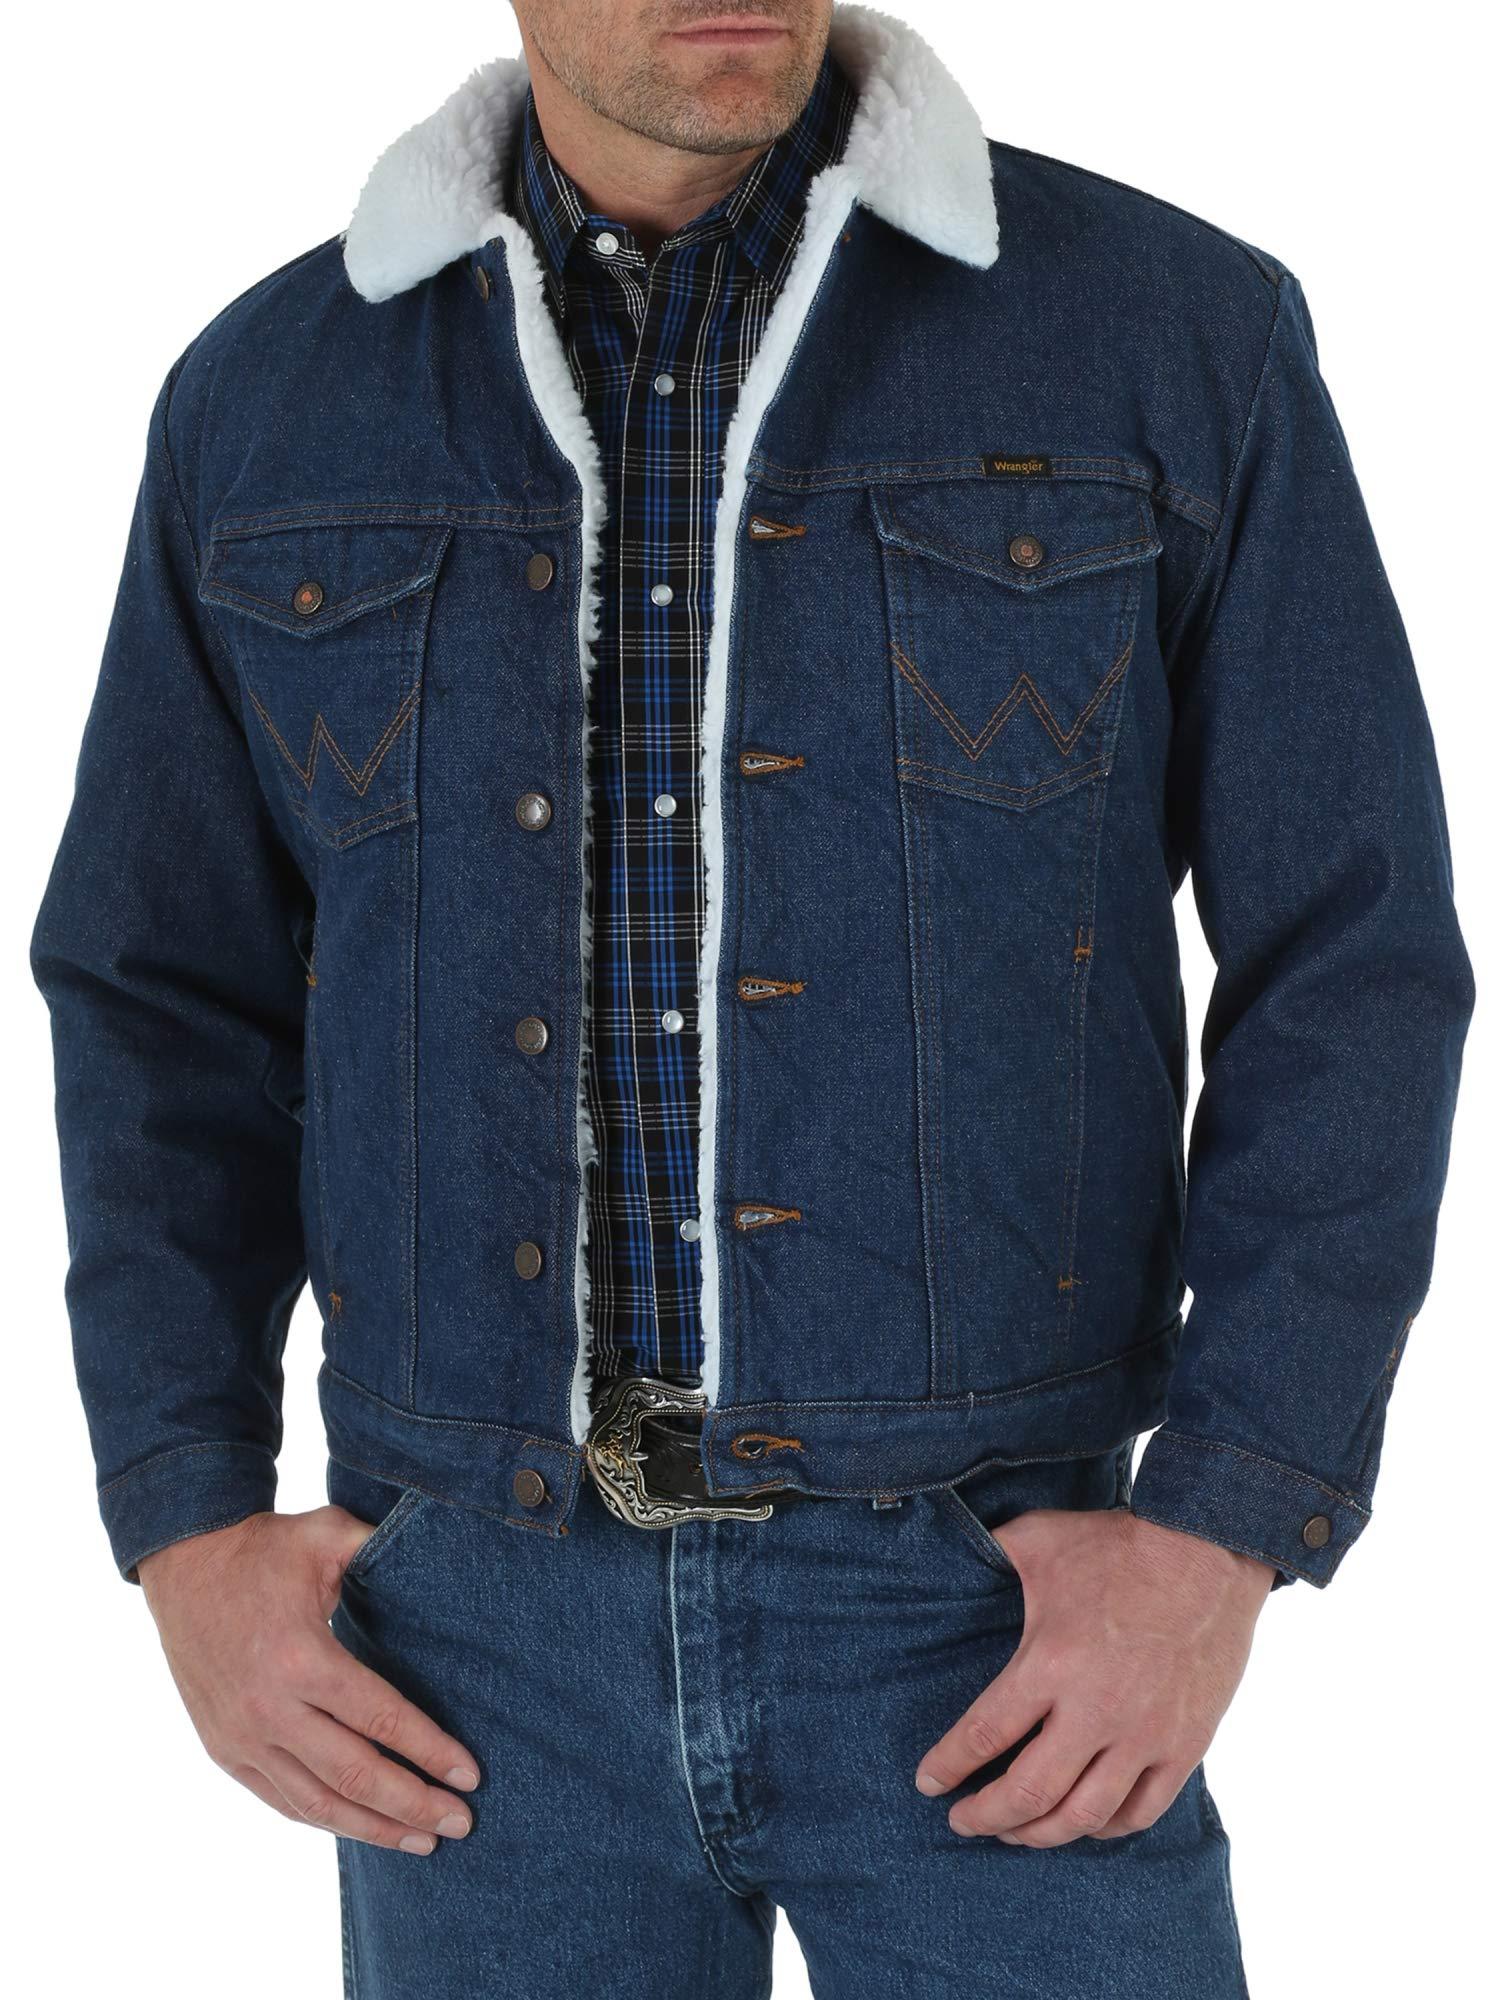 Wrangler Mens Western Style Lined Denim Jackets in Blue for Men - Save ...